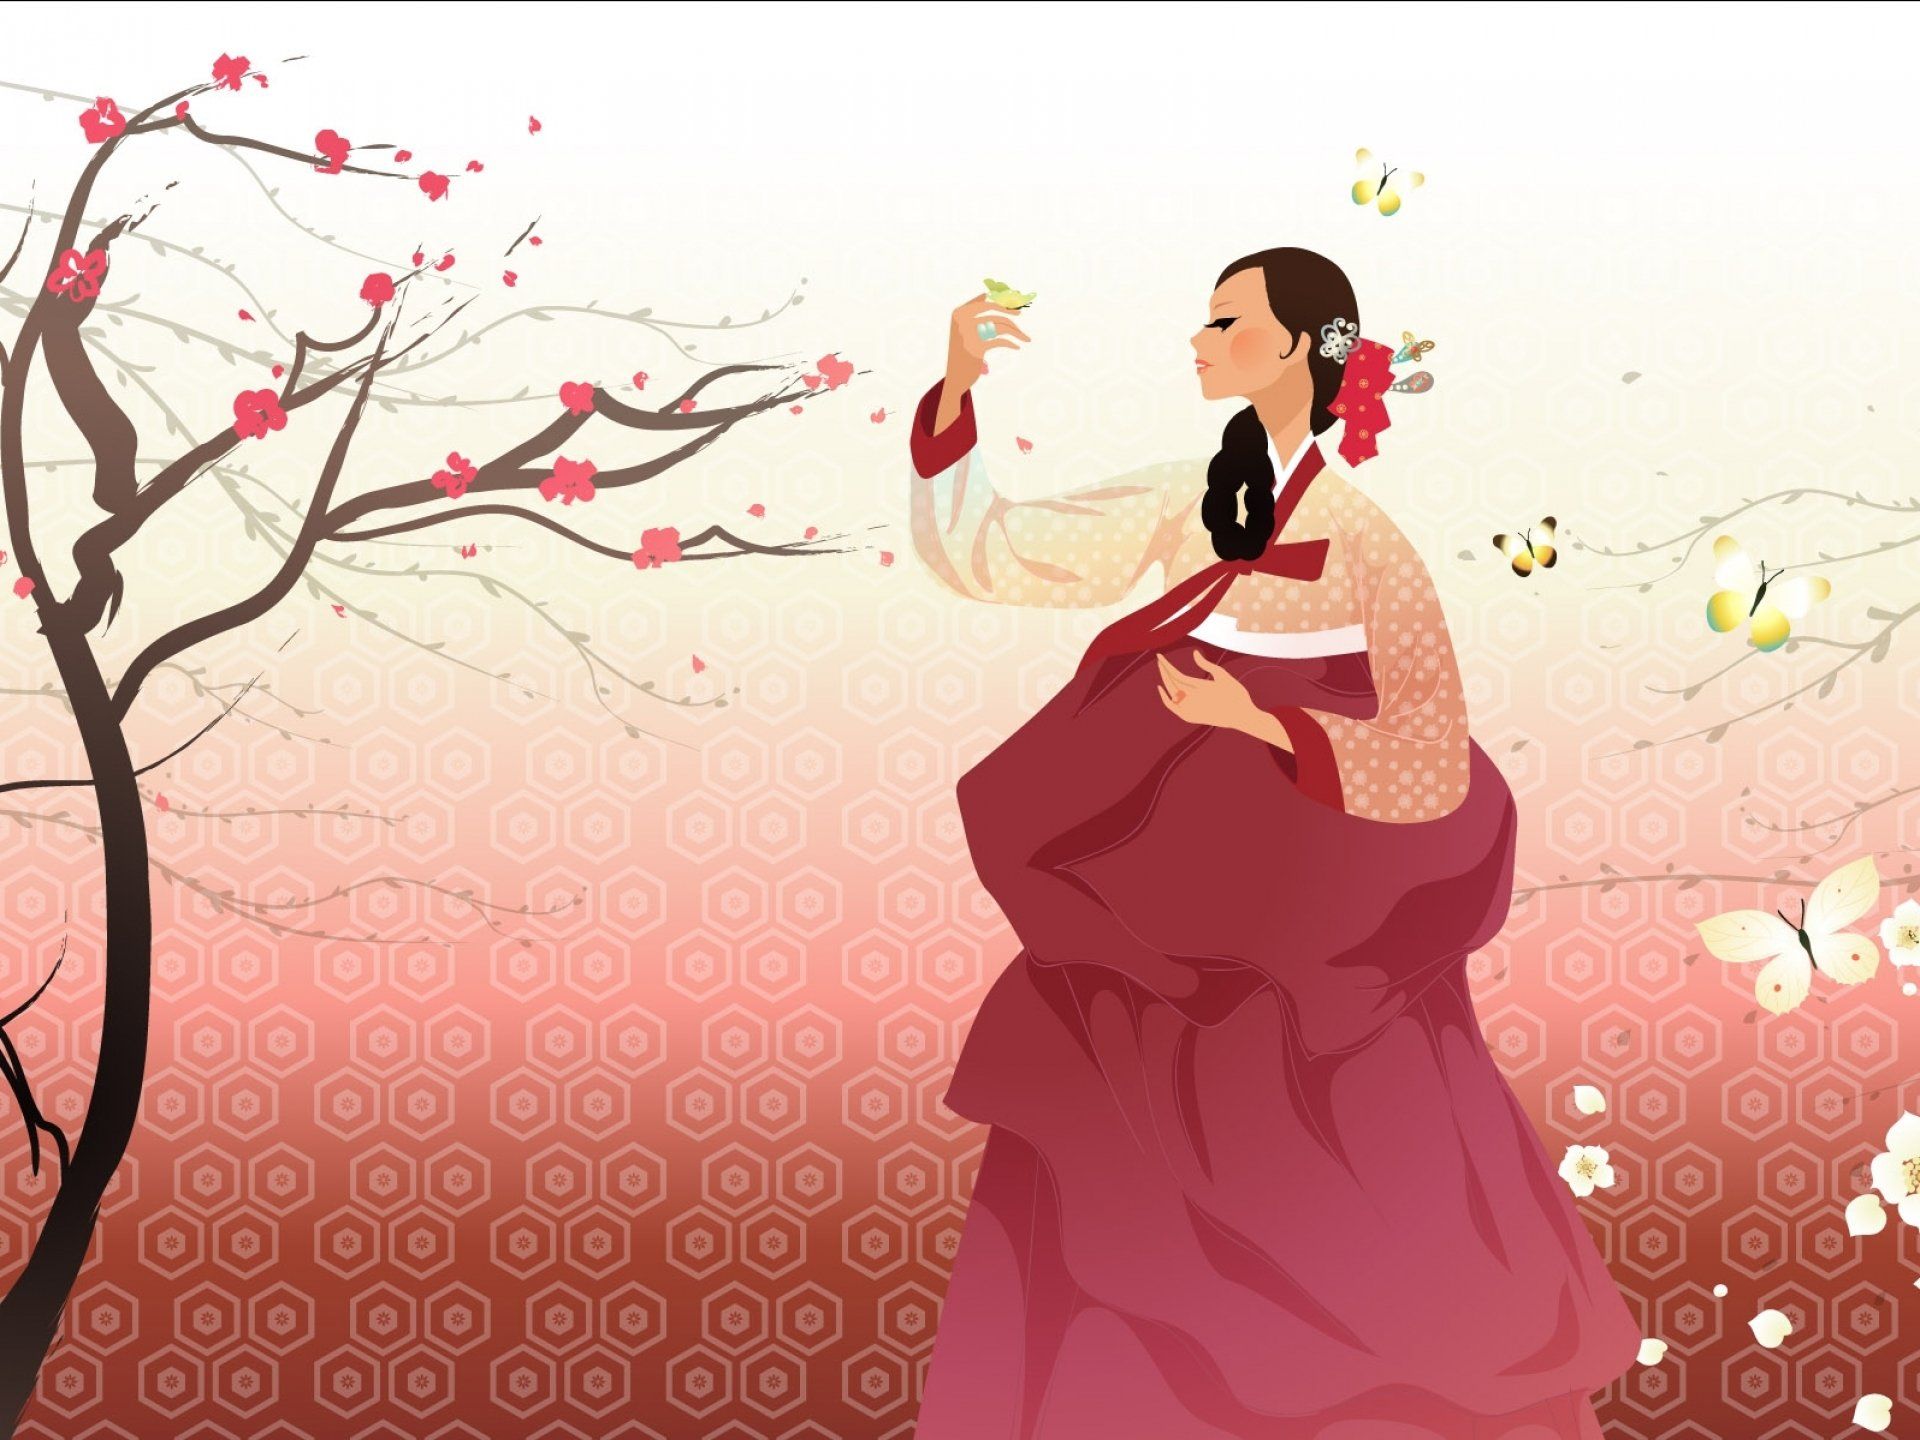 Wallpaper, 1920x1440 px, ART, artistic, artwork, Asian, female, girl, girls, korea, Korean, oriental, vector, woman, women 1920x1440